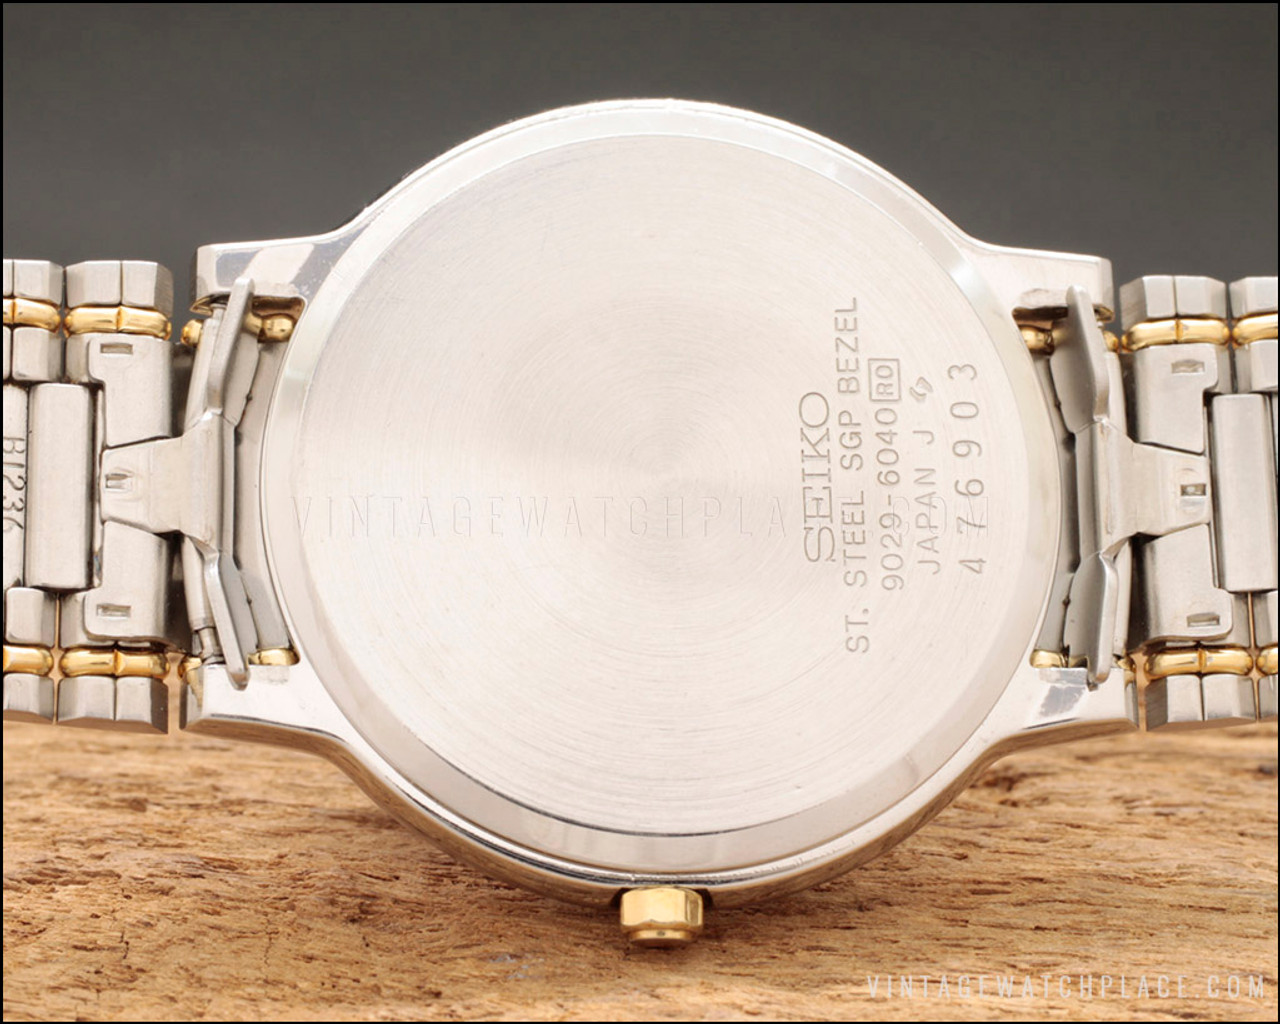 Seiko 9029-6040 quartz Dress vintage watch for Ladies or boys, 100%  original, Used.